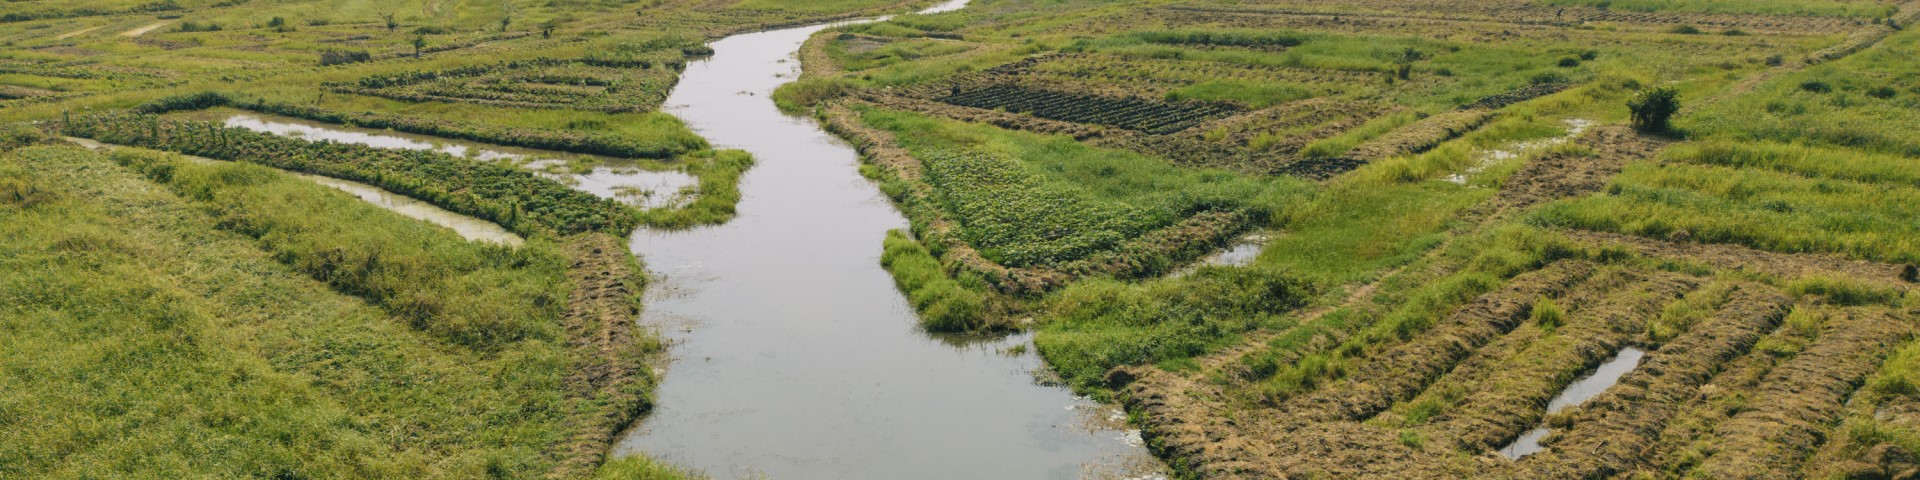 The Hondji-Bembê Canal meanders its way across the landscape.